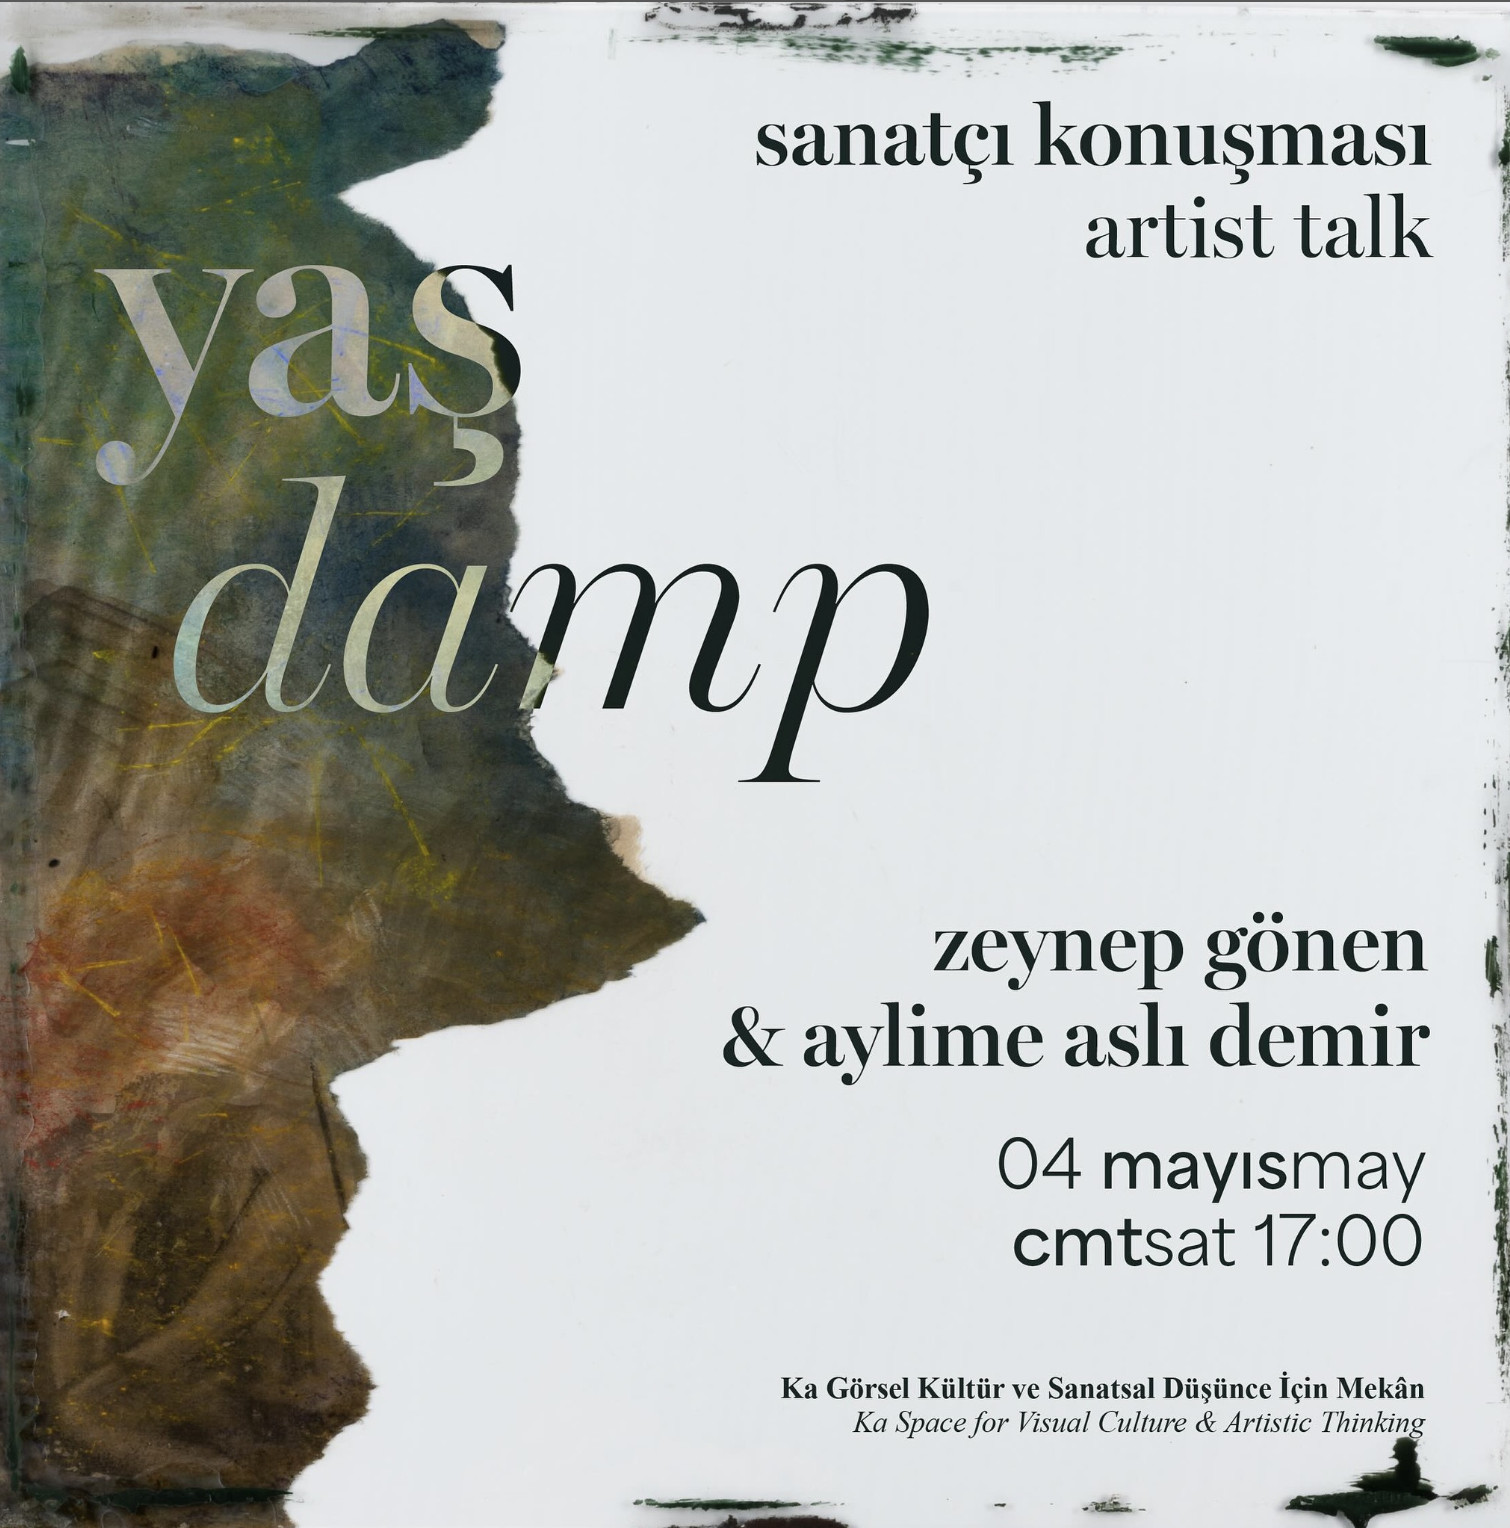 Zeynep Gönen’s “Damp” exhibition closing set for tomorrow | Kaos GL - News Portal for LGBTI+